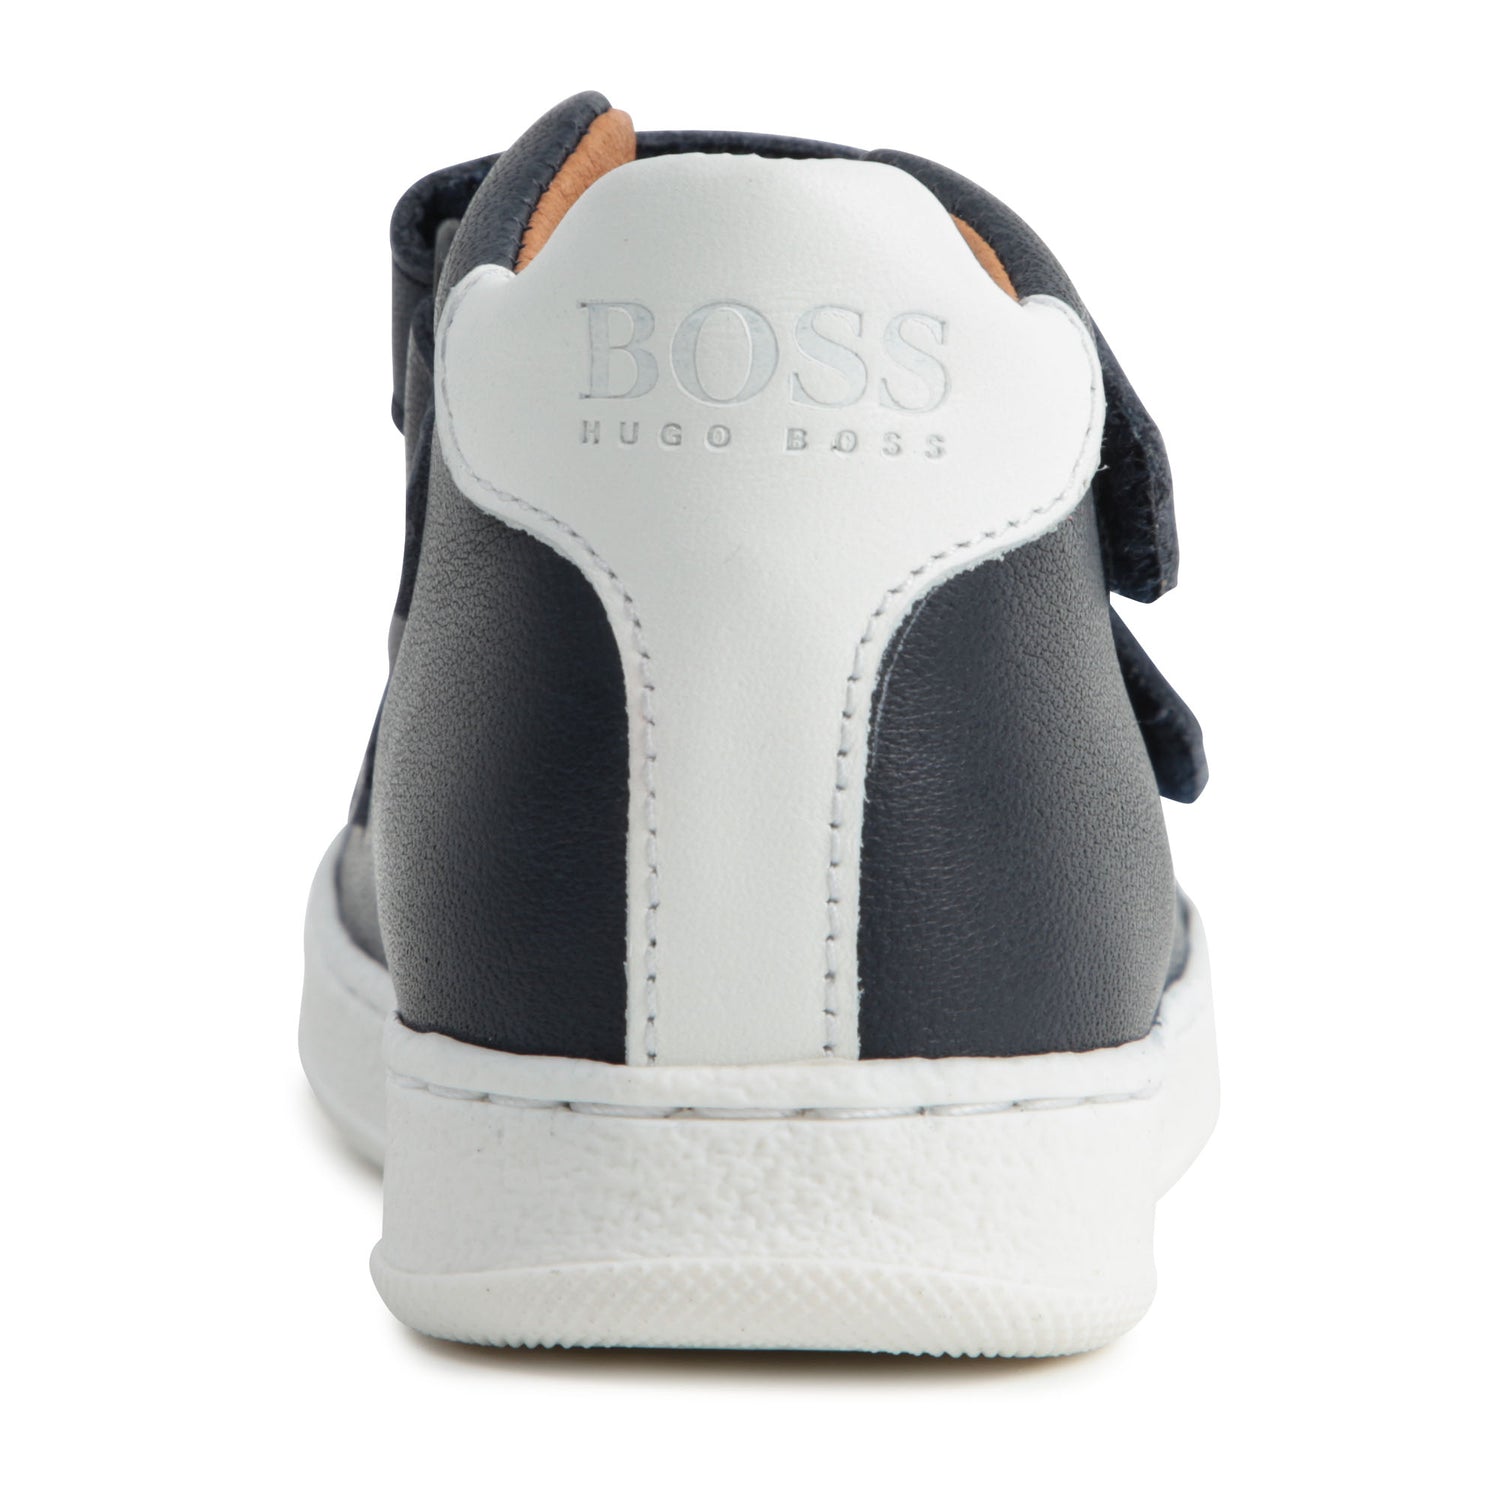 Hugo Boss Navy Blue High Top Velcro Trainers 9136 / 9220 – Shoe Inc